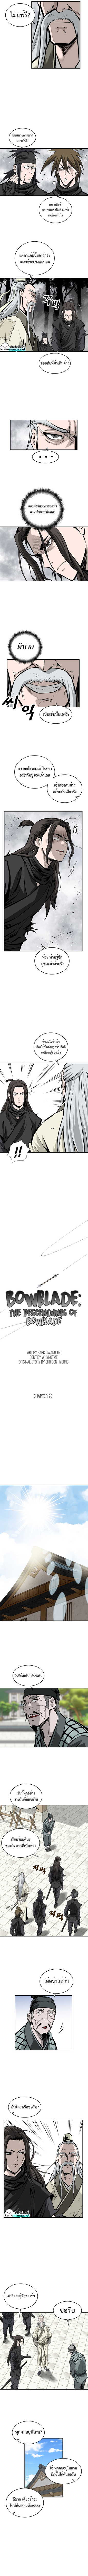 Bowblade (The Descendants of Bowblade) 28 (2)